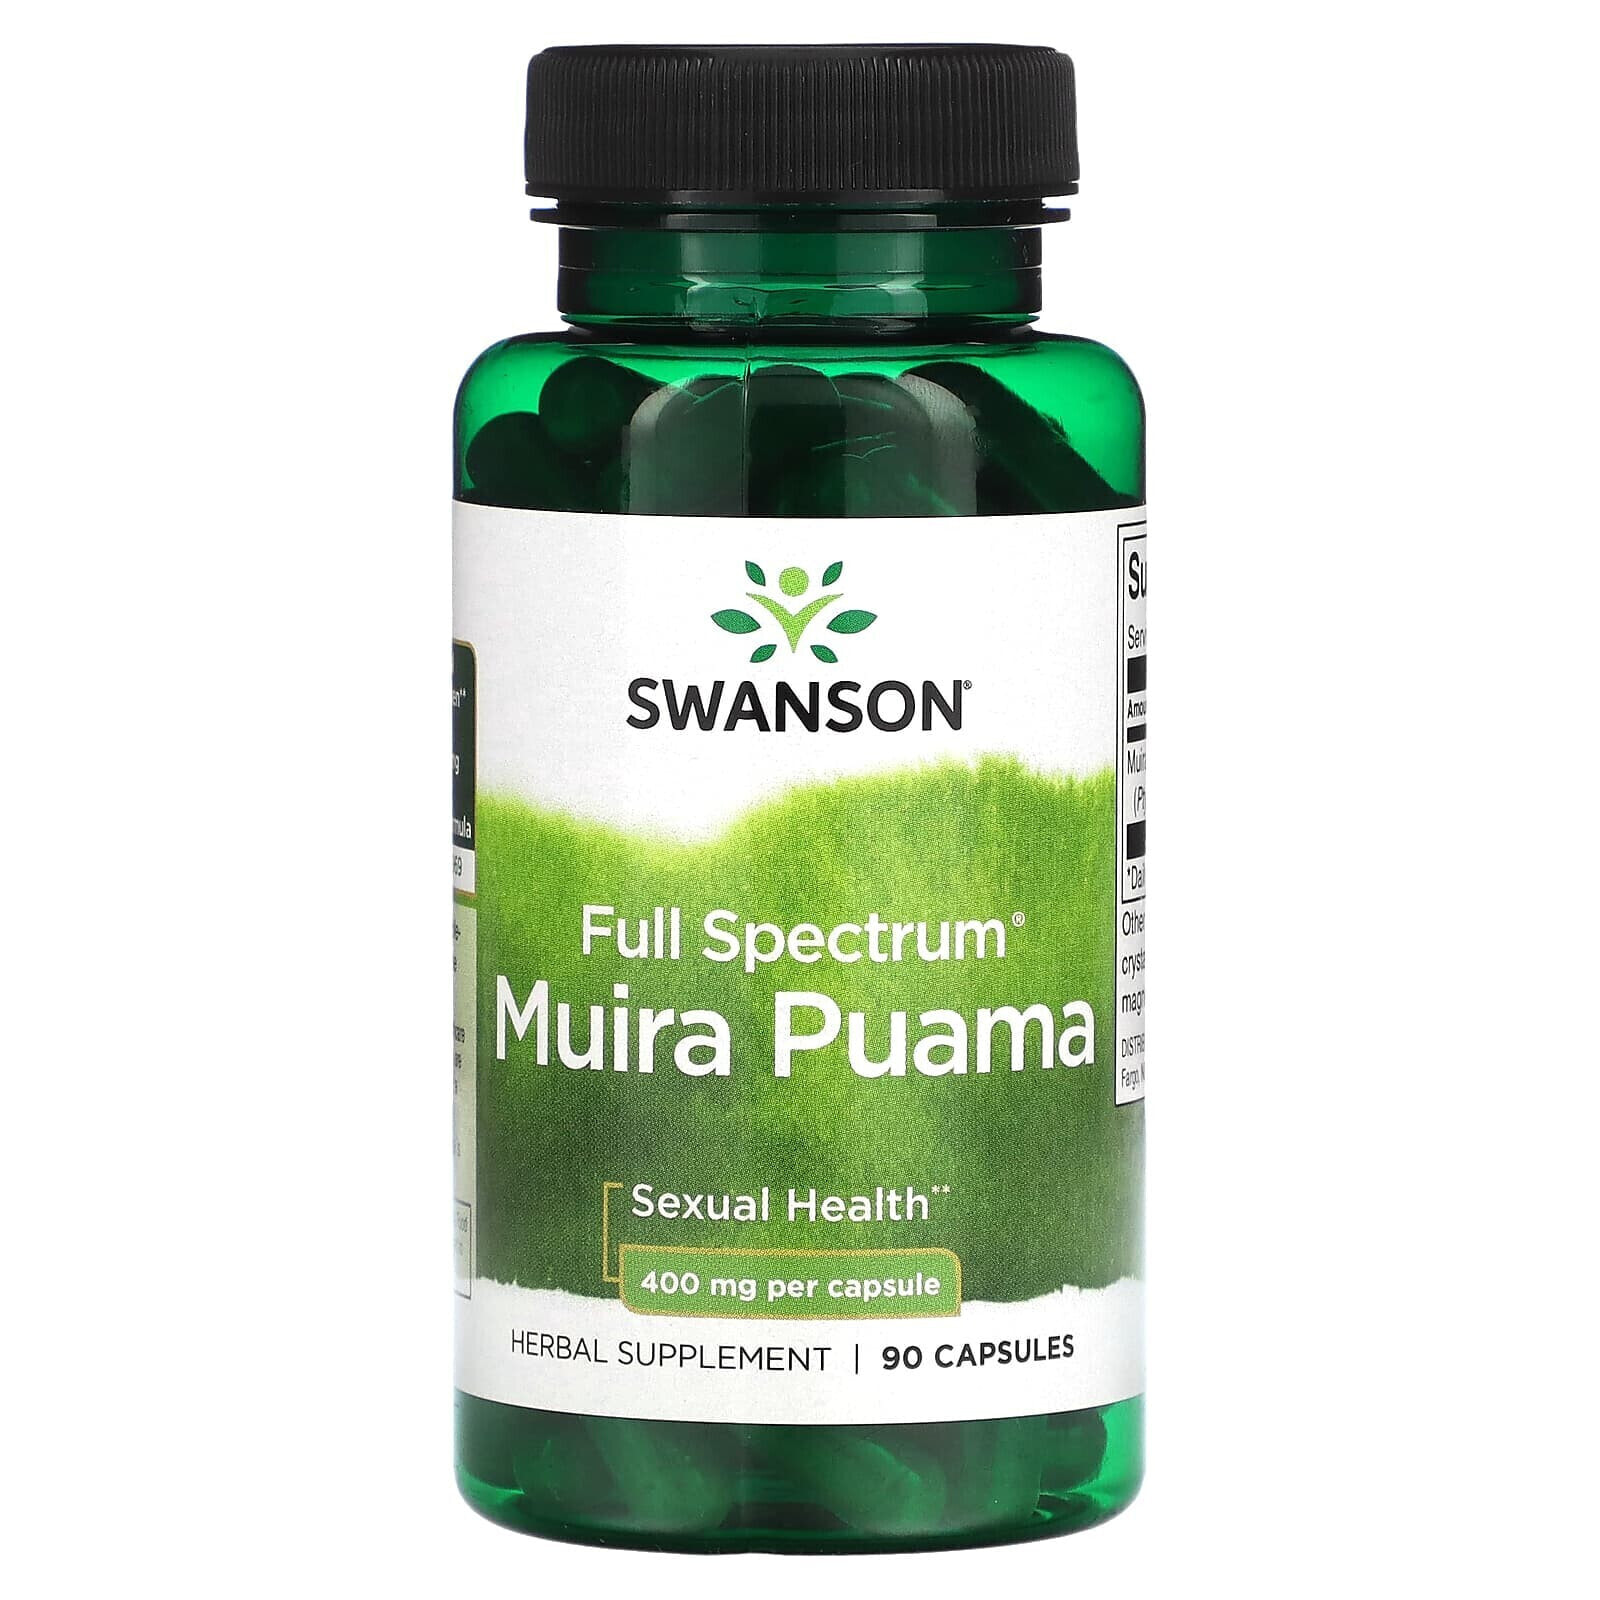 Full Spectrum, Muira Puama, 400 mg, 90 Capsules